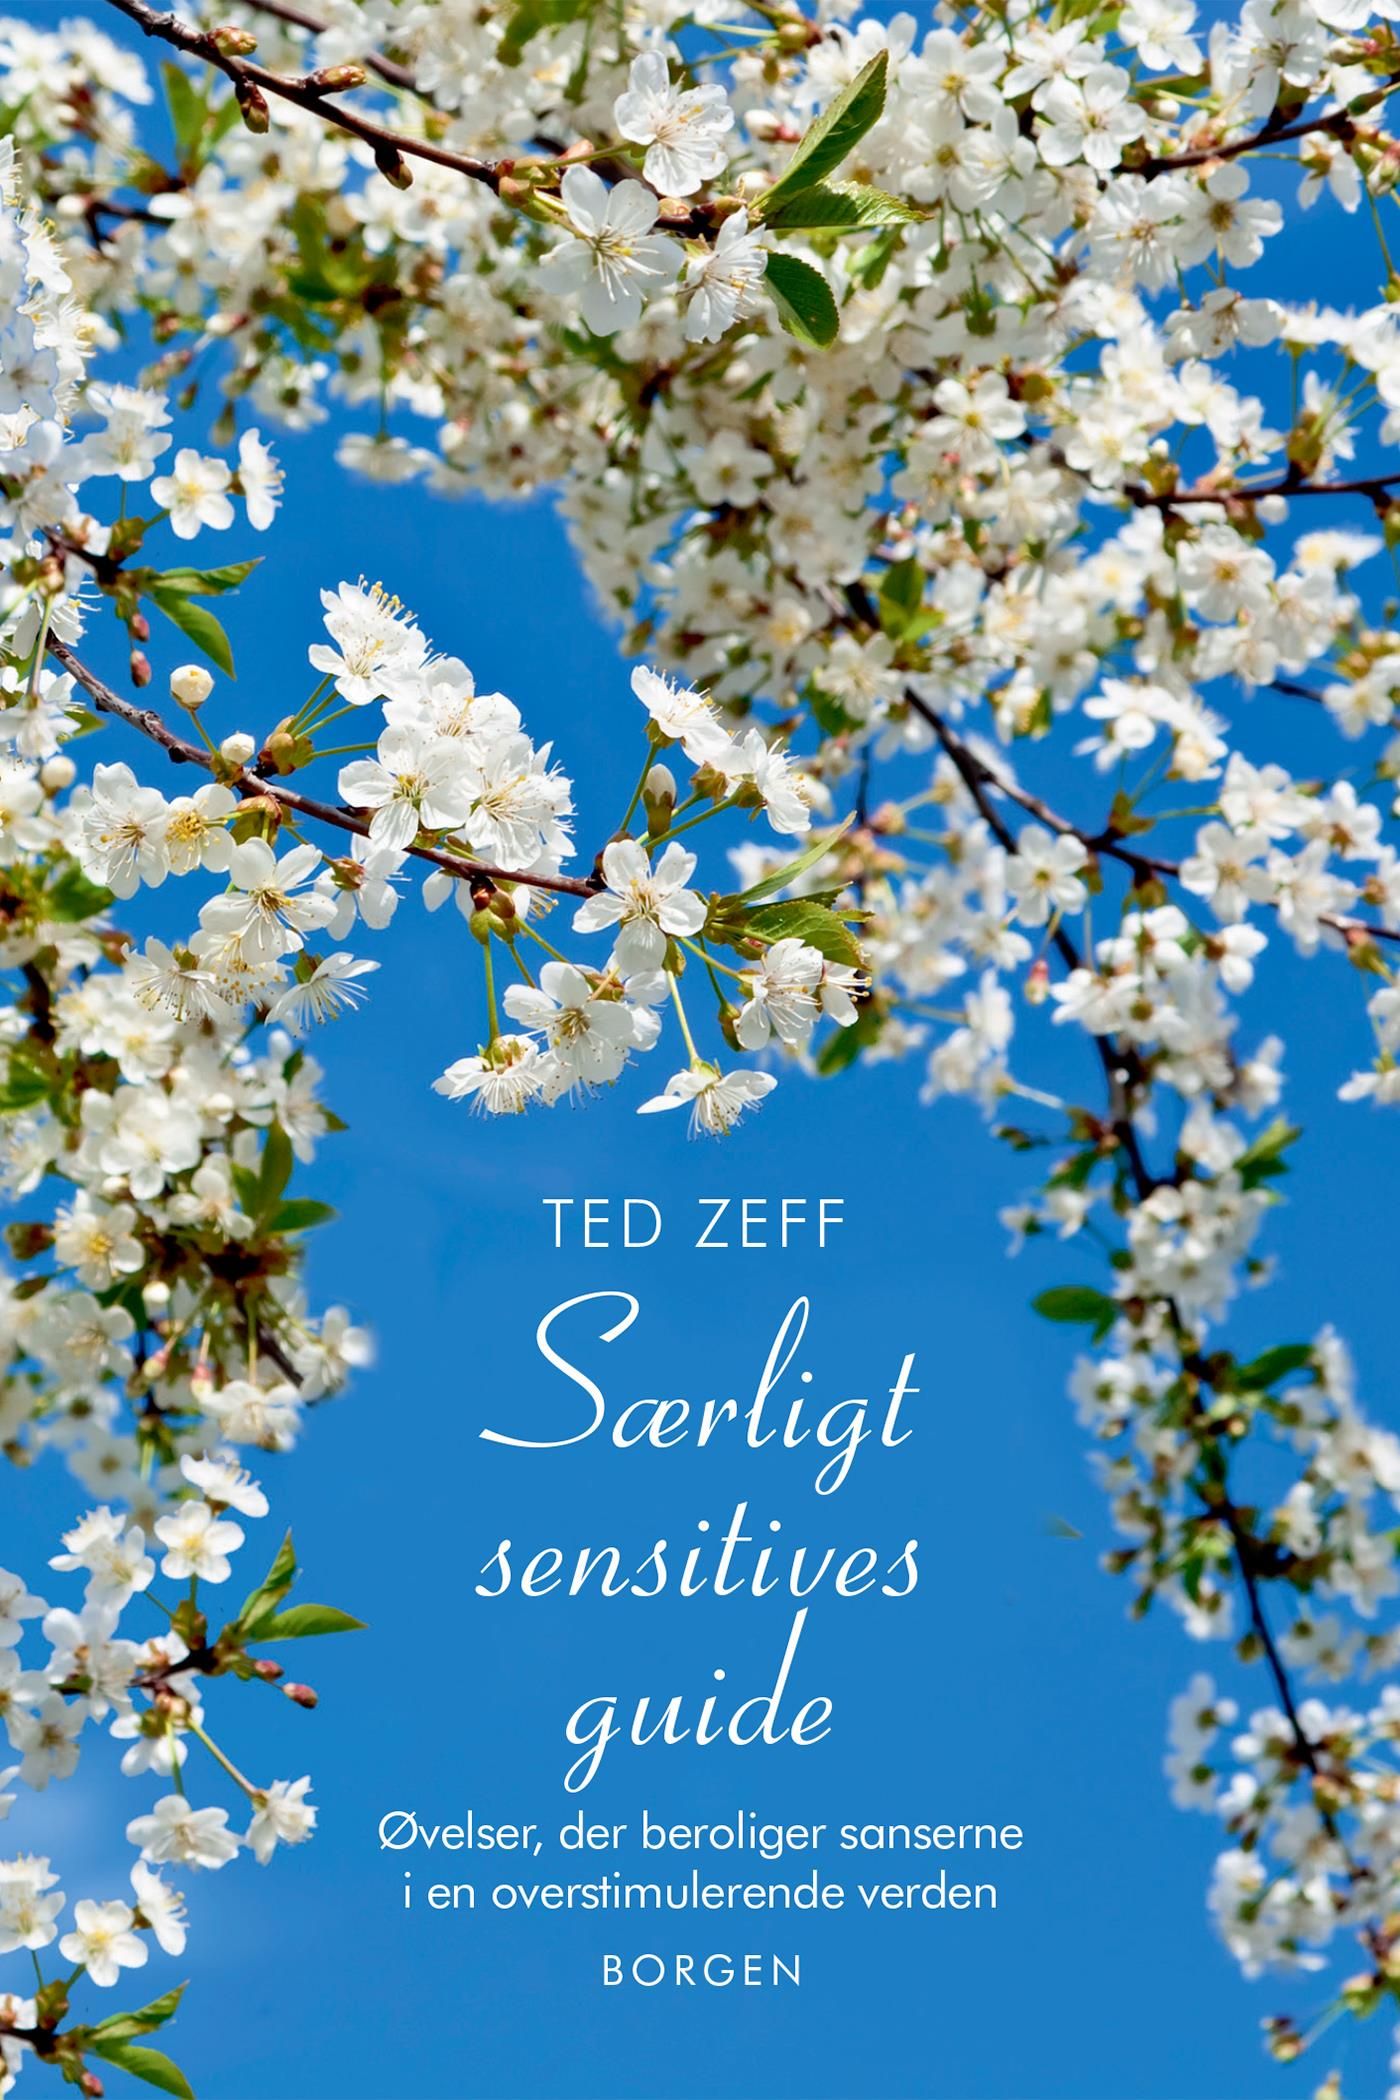 Særligt sensitives guide, e-bok av Ted Zeff